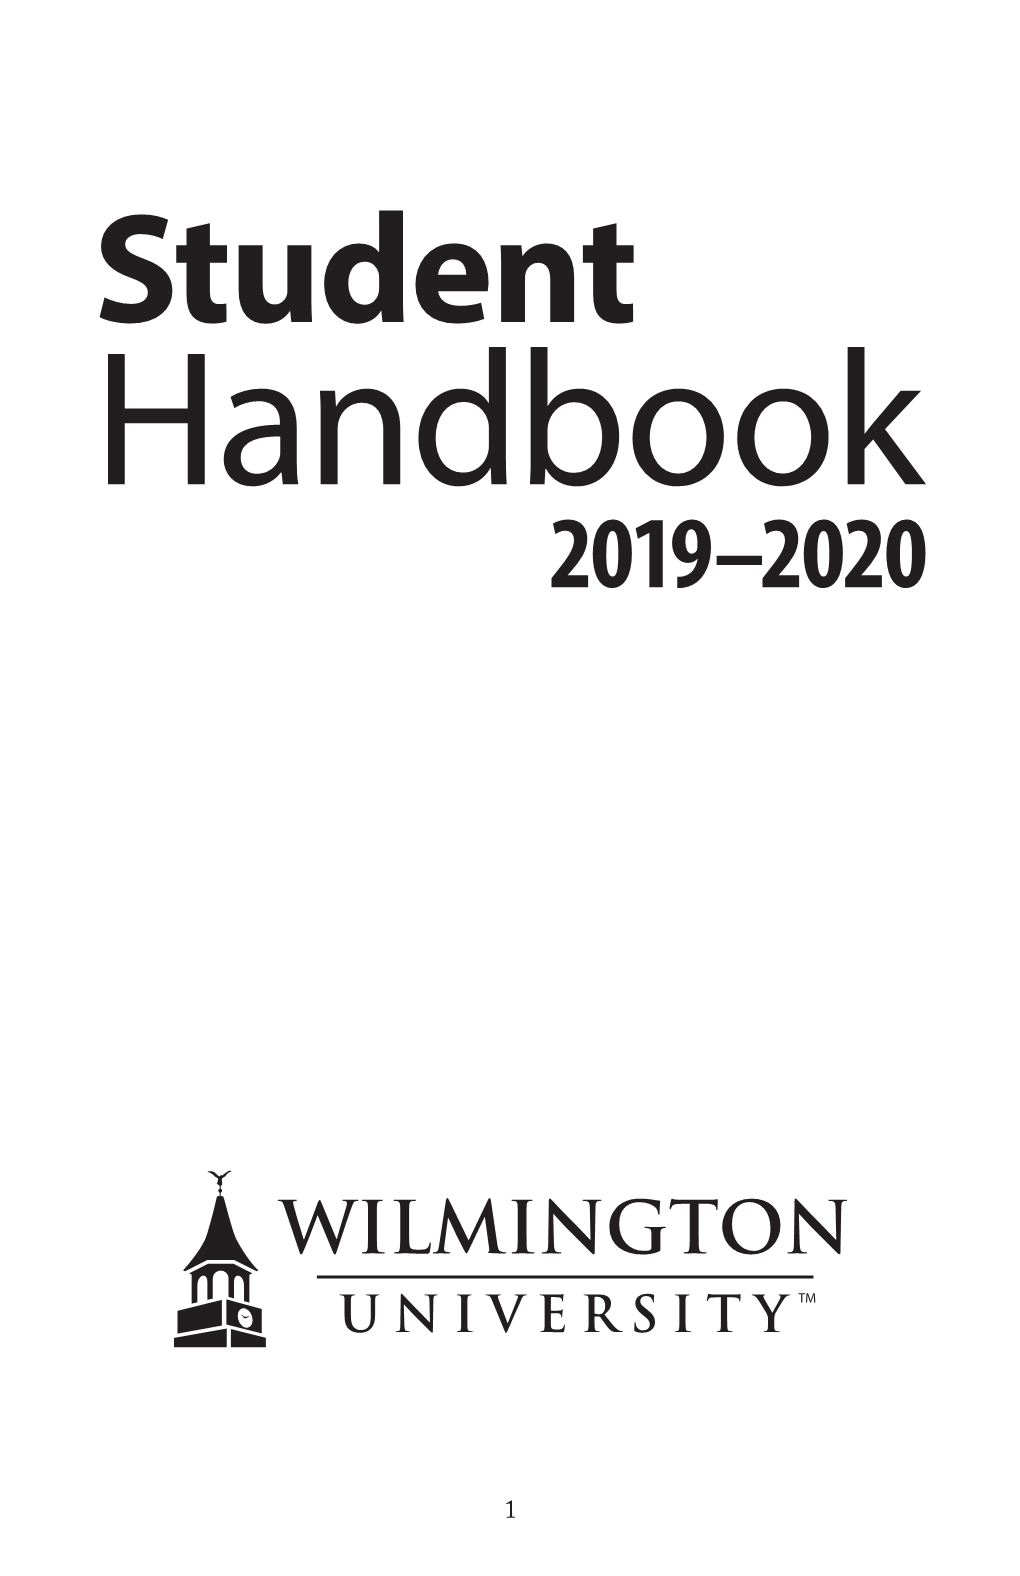 The Student Handbook